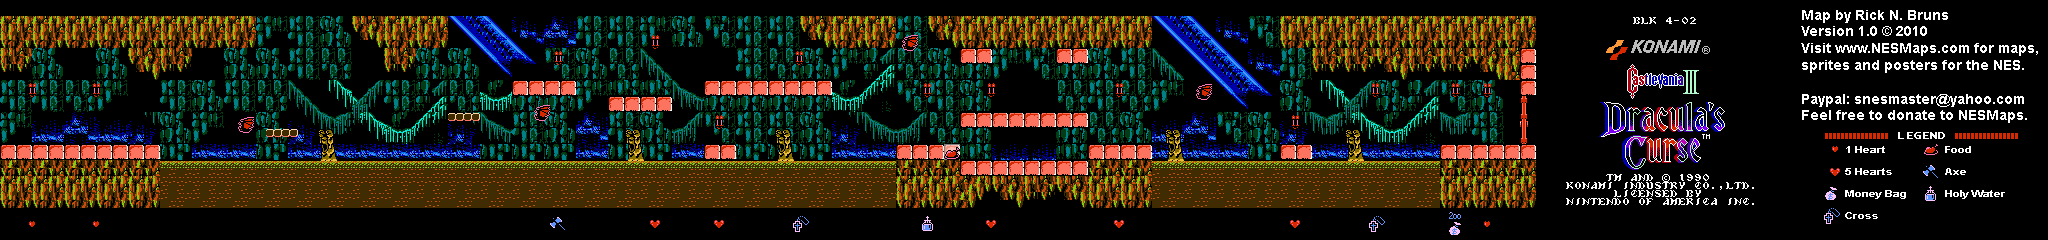 Castlevania III Dracula's Curse - Block 4-02 Nintendo NES Map